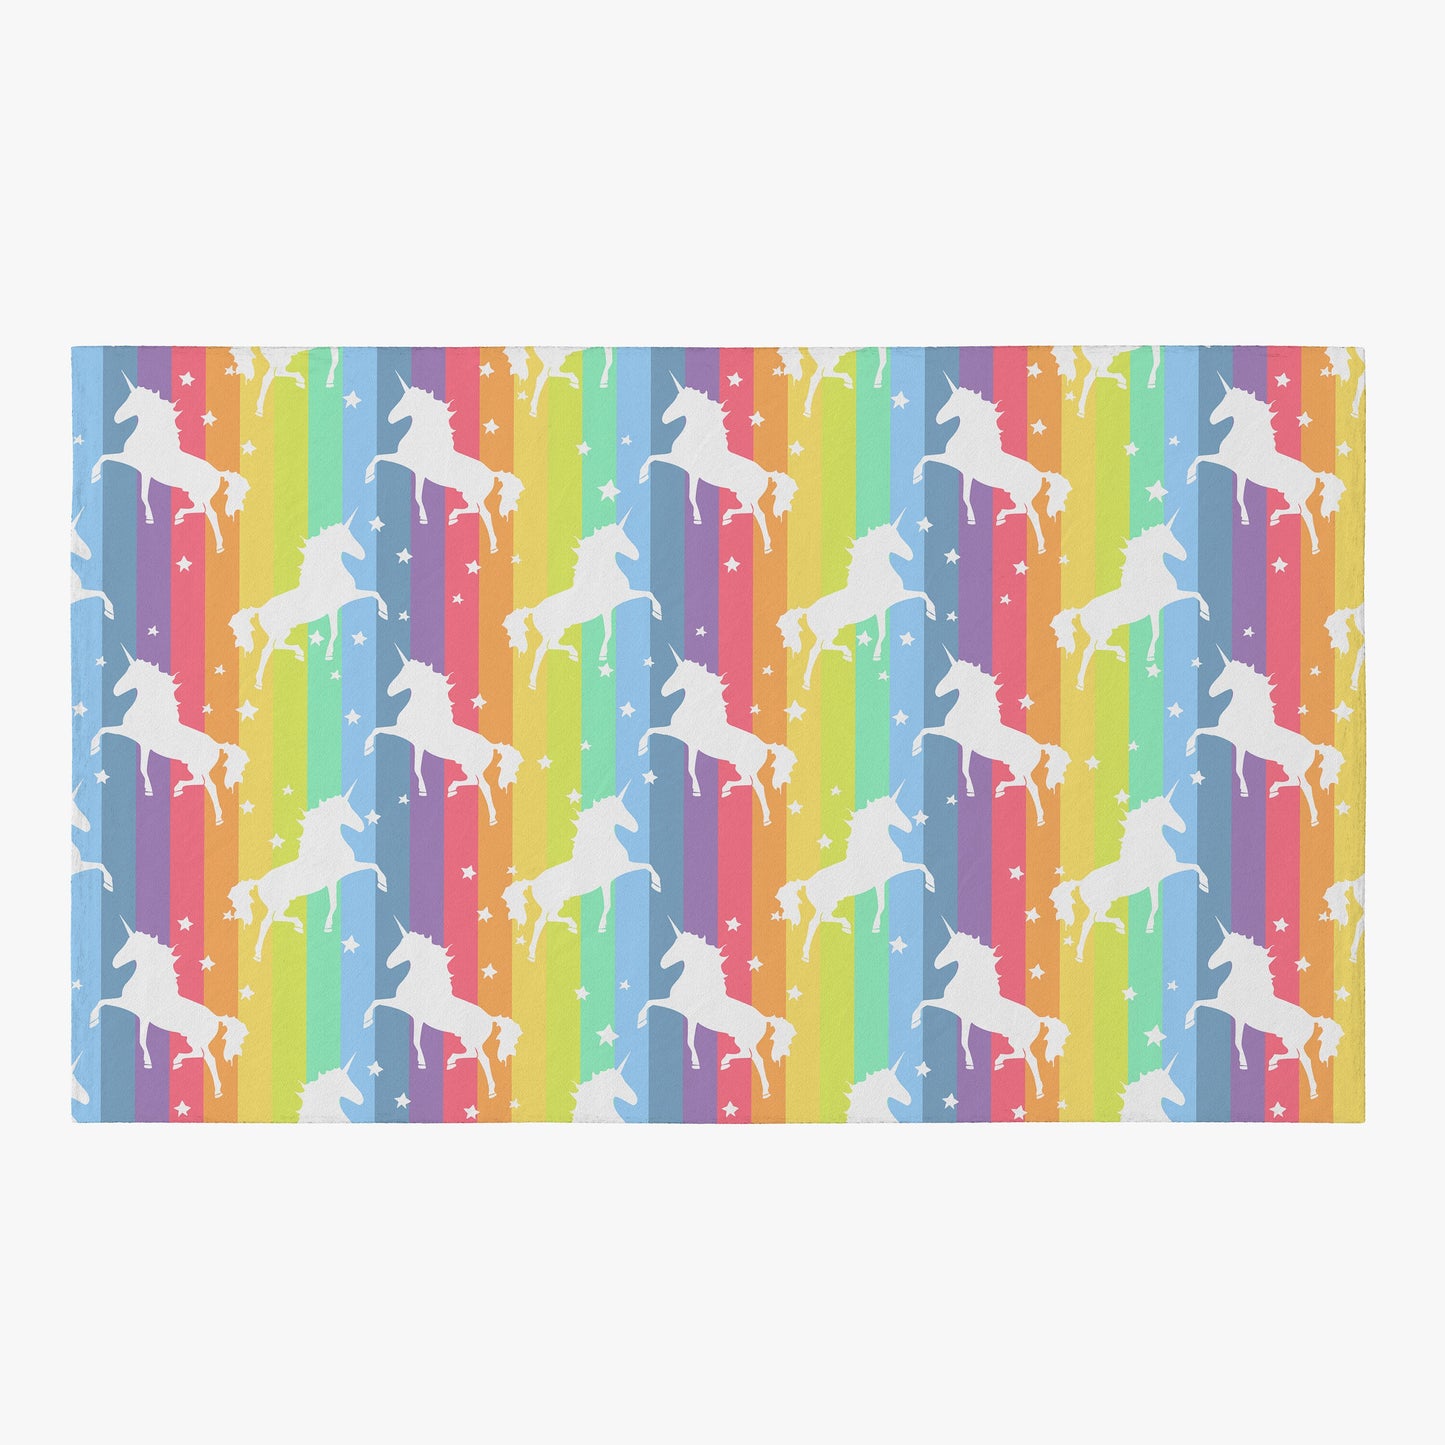 Rainbow Unicorn Rug rainbow Rug unicorn Rug unicorn Floor Rug rainbow Rugs 3x5 4x6 5x7 8x10 9x12 Large unicorn rugs unicorn decor